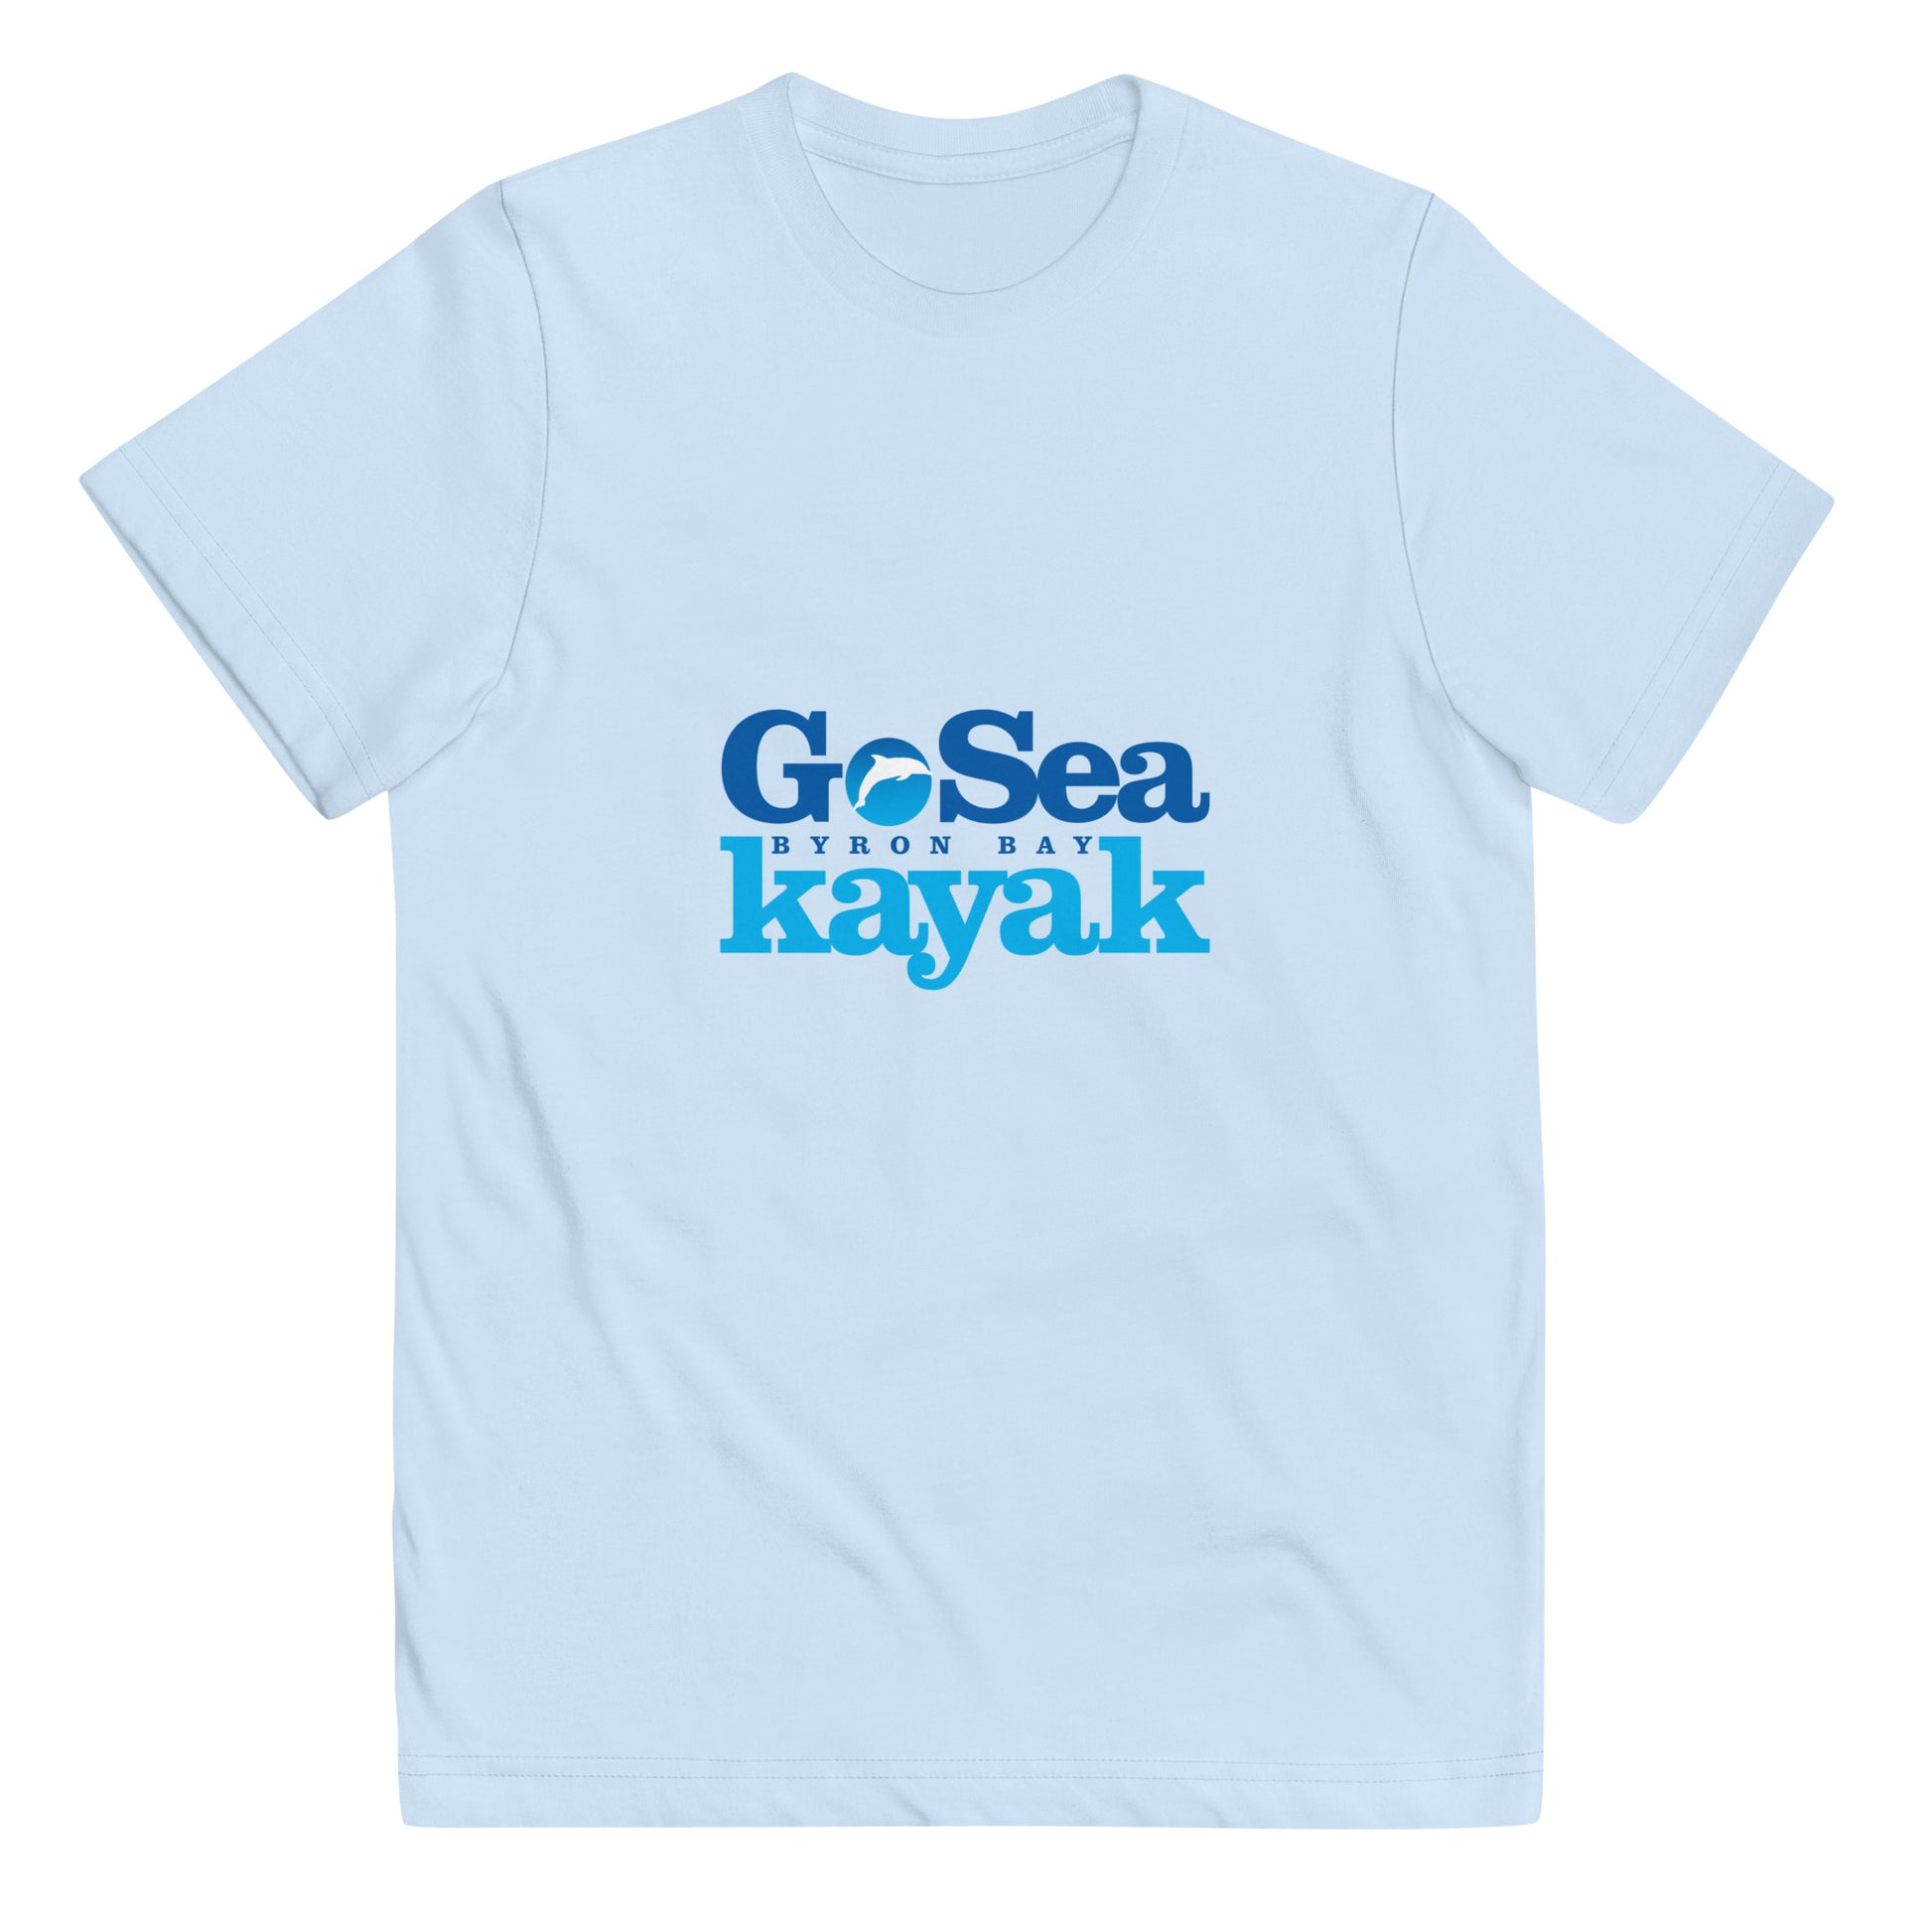  Kids T-Shirt - Light Blue - Front flat lay view - Go Sea Kayak Byron Bay logo on front - Genuine Byron Bay Merchandise | Produced by Go Sea Kayak Byron Bay 